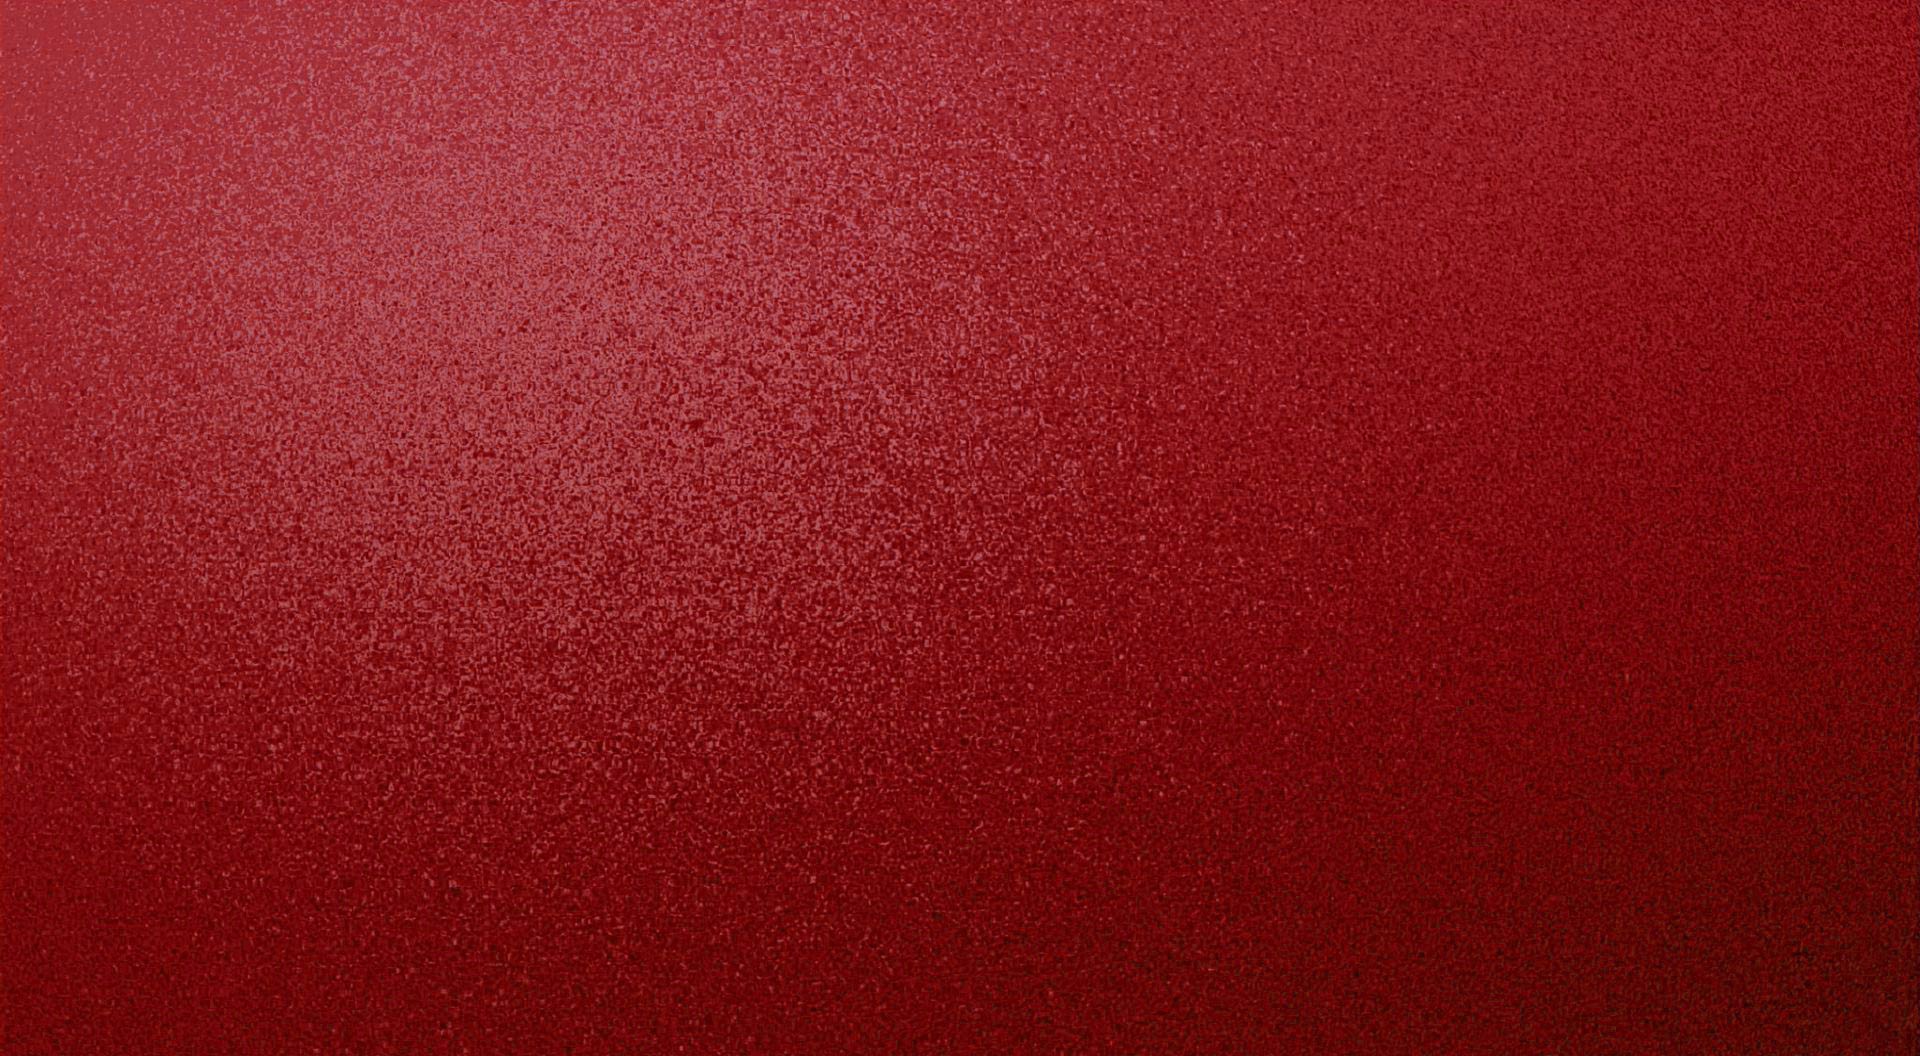 Red Textured Background Desktop Wallpaper. Background